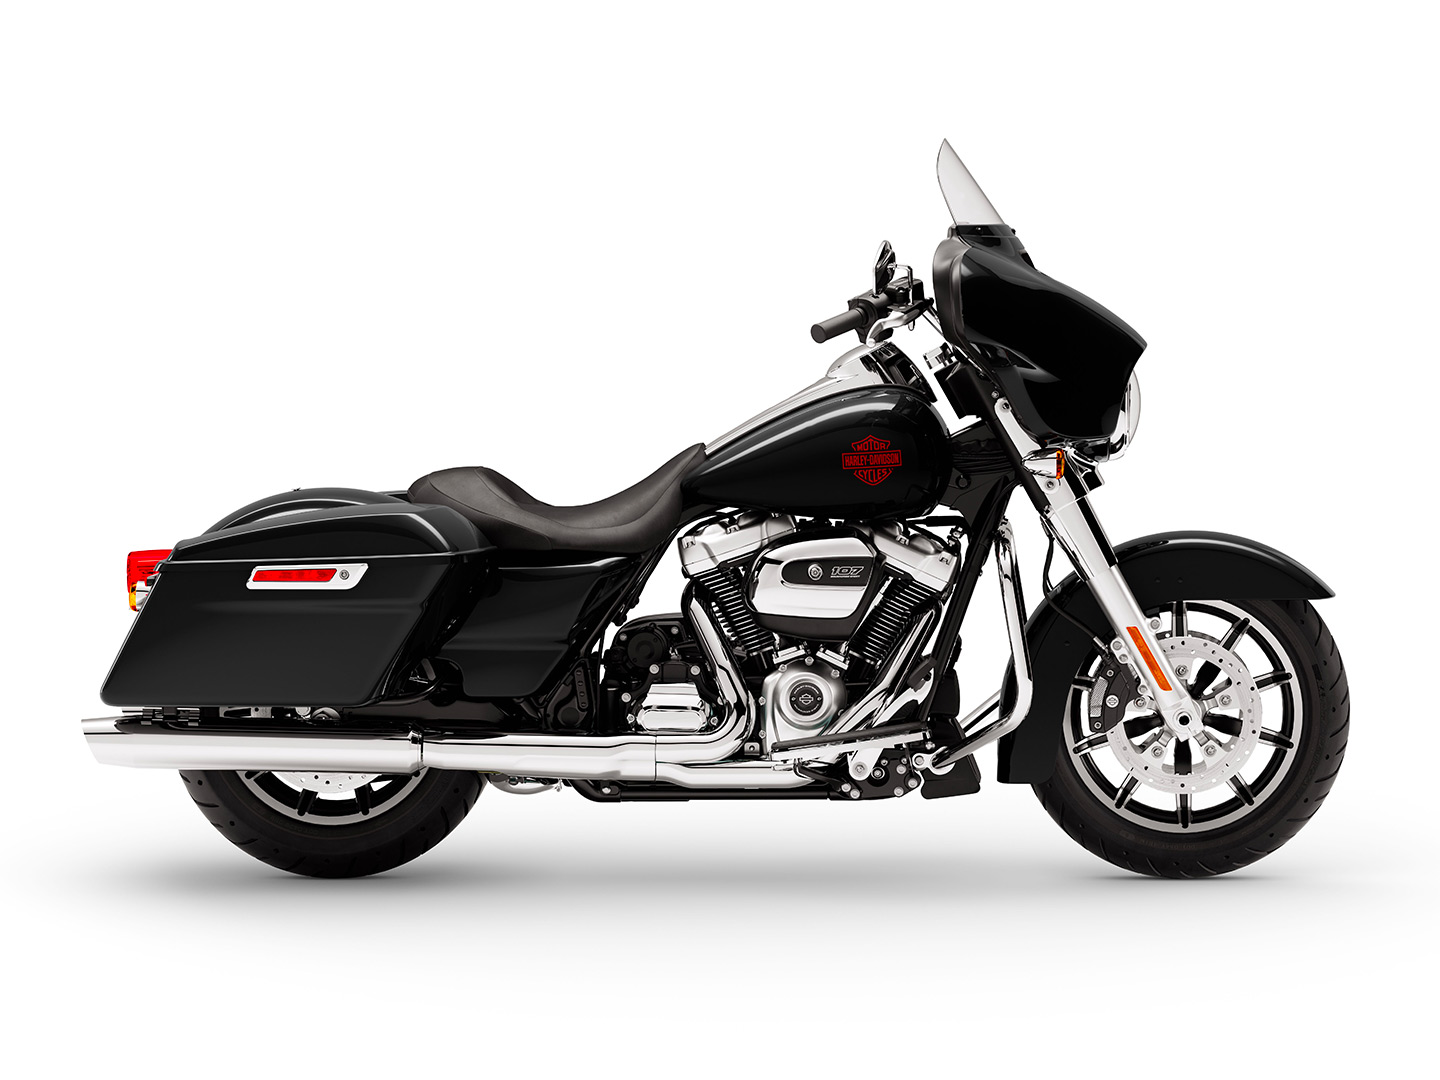 2022 Harley Davidson Electra Glide Standard Review